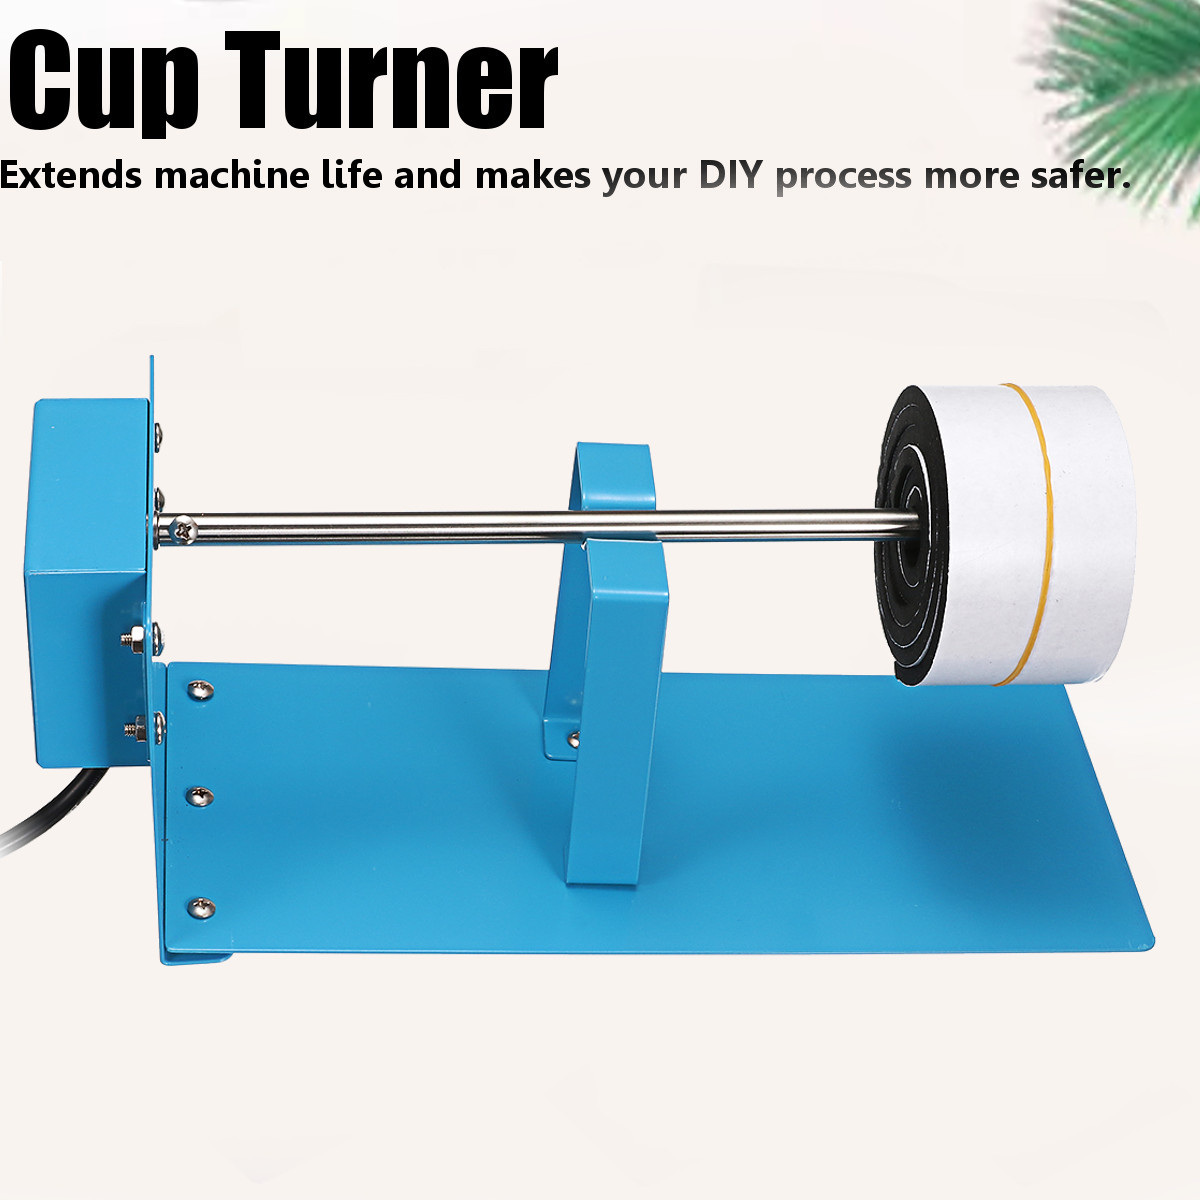 5RPM-110V-Single-Cup-Turner-Spinner-Tumbler-Cuptisserie-Epoxy-Spinner-Glitter-Tumbler-for-Crafts-Tum-1595944-7